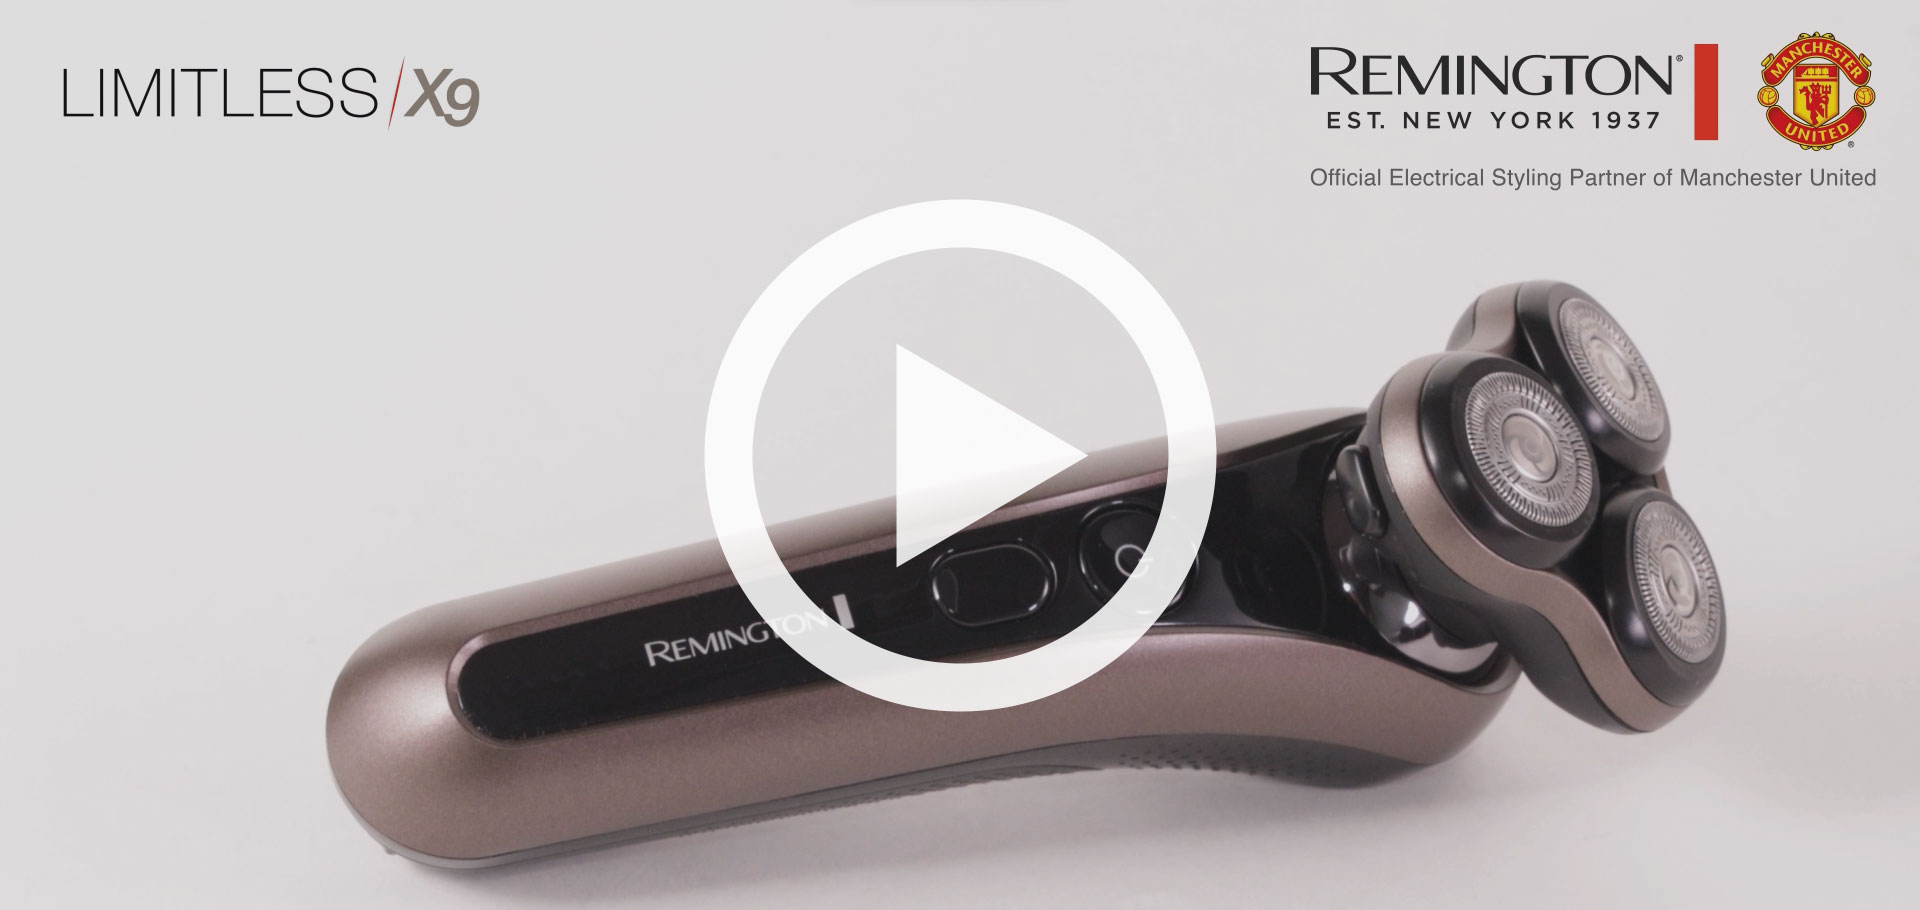 X9 Rasur Remington | Remington Limitless Rotationsrasierer | |